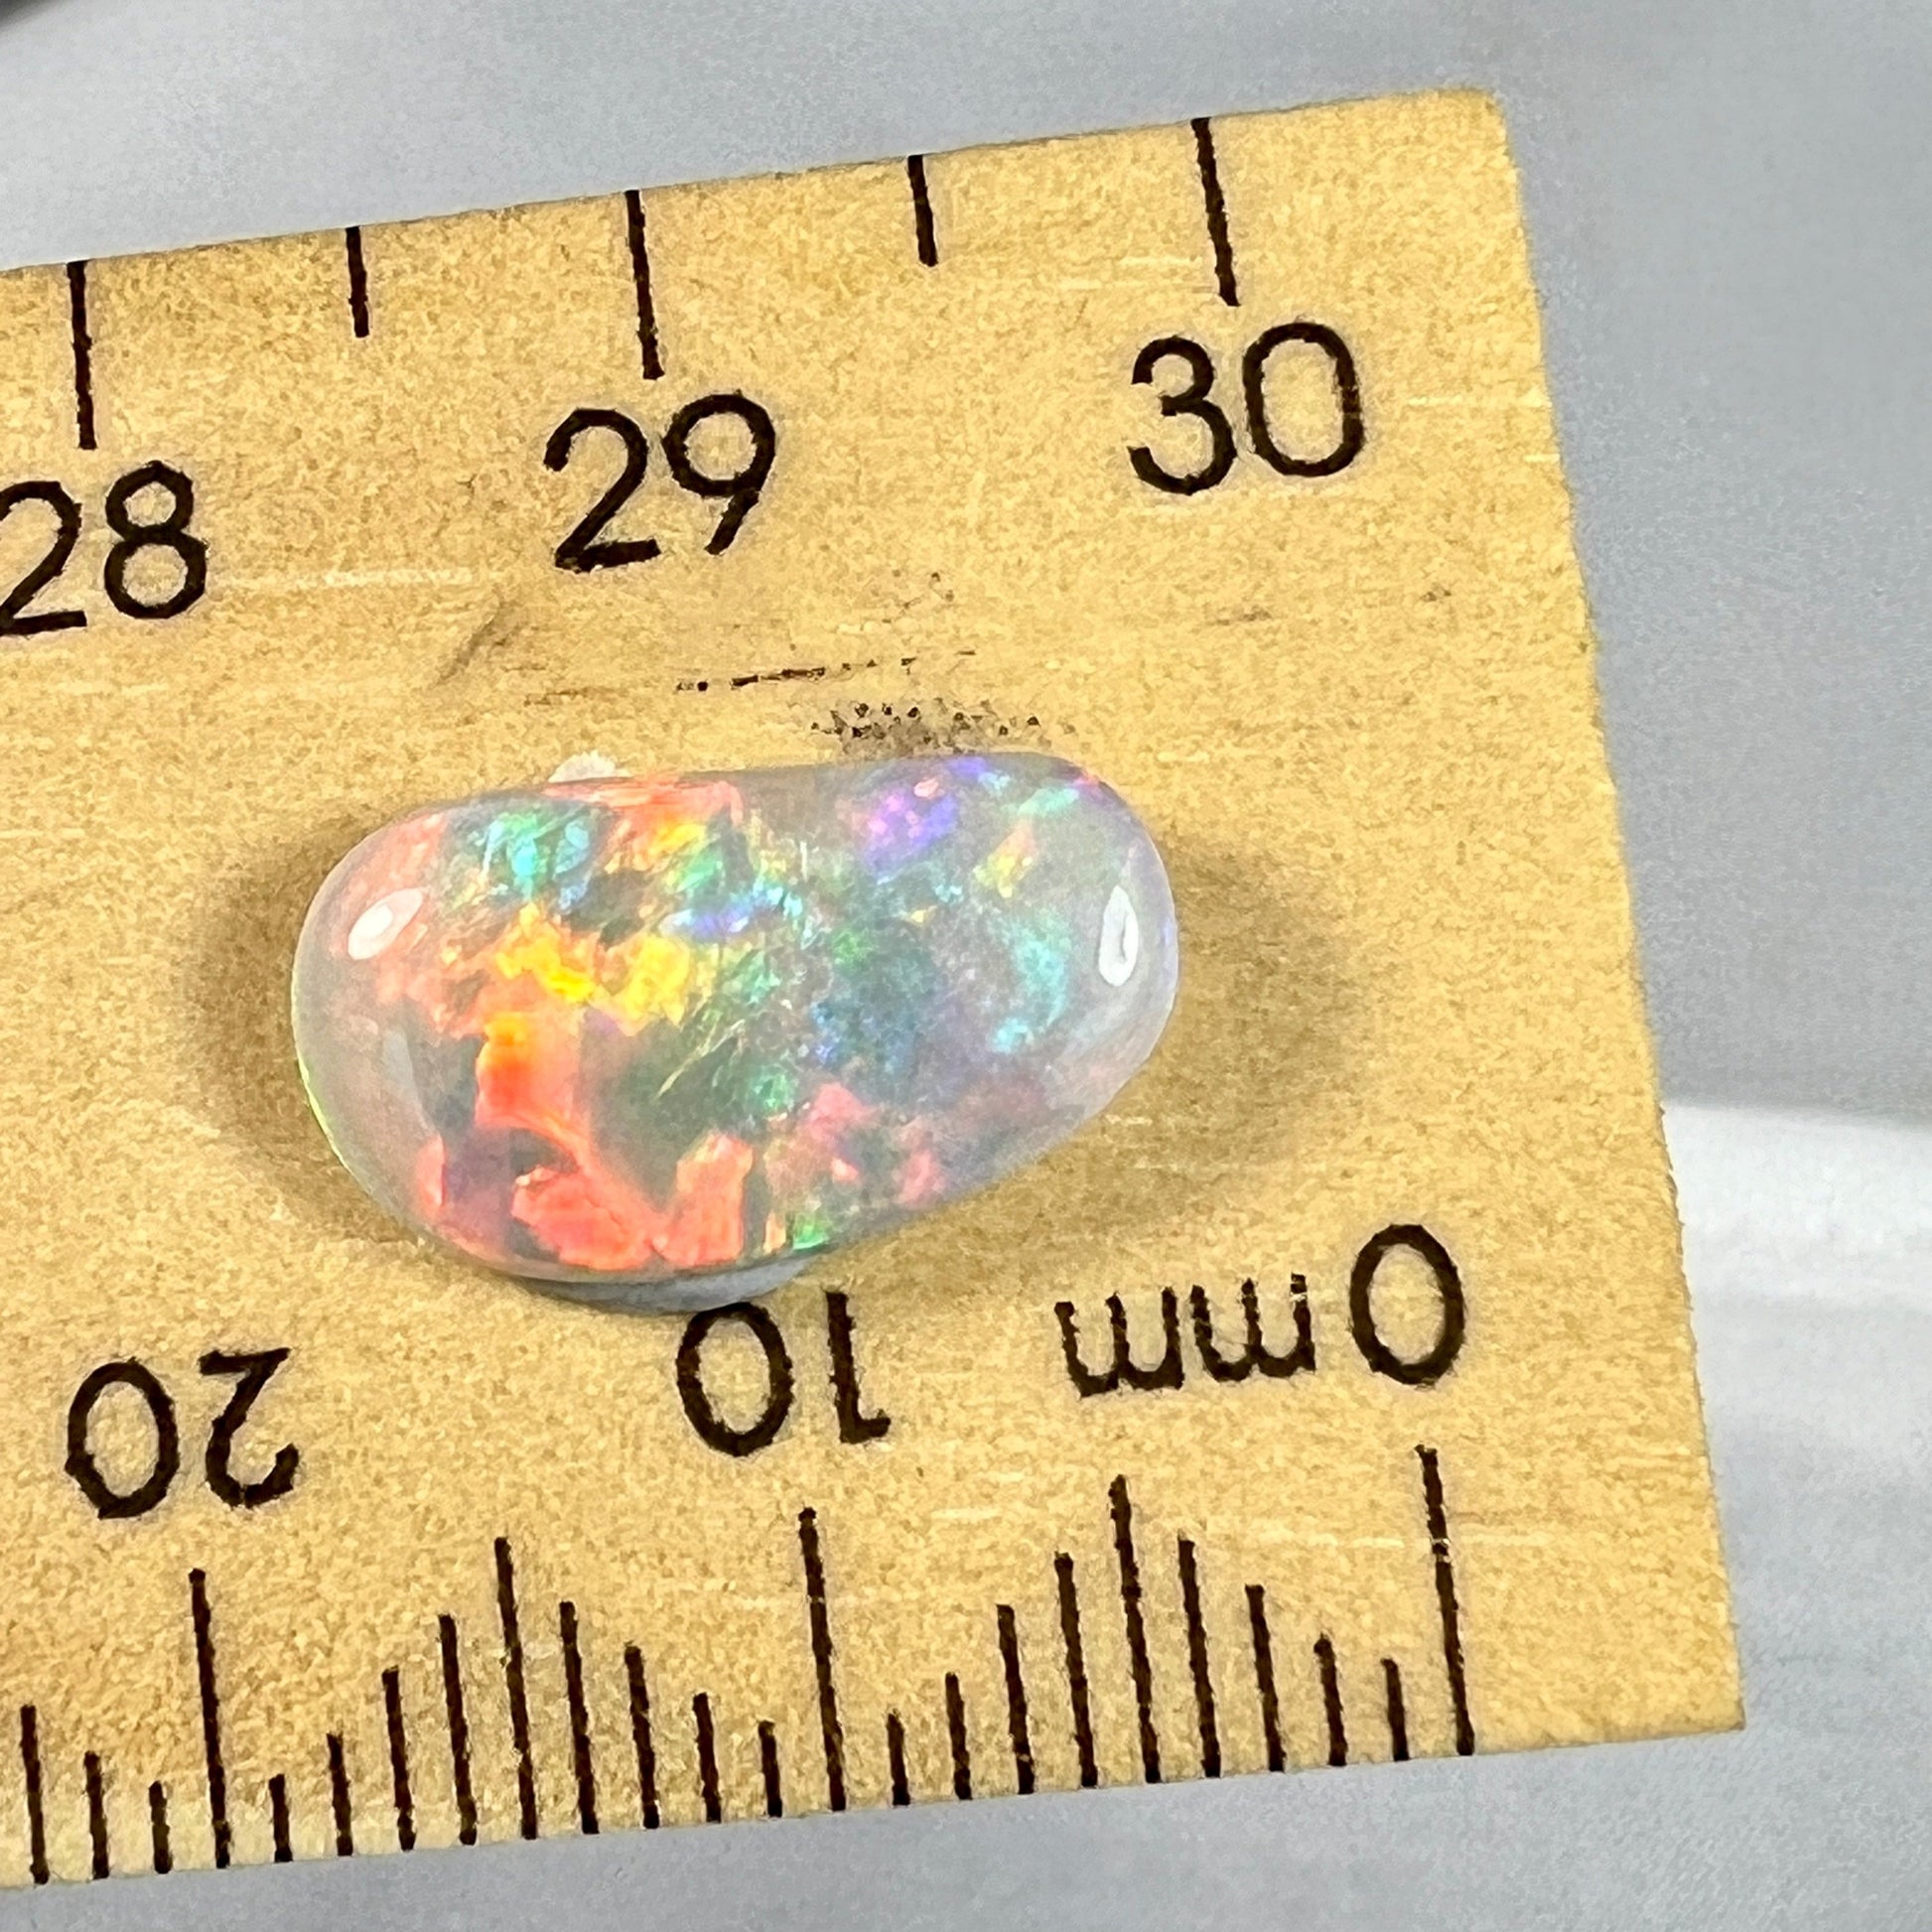 Classic Mintabie gemstone, full of fiery colours. A perfect specimen of Australian opal.